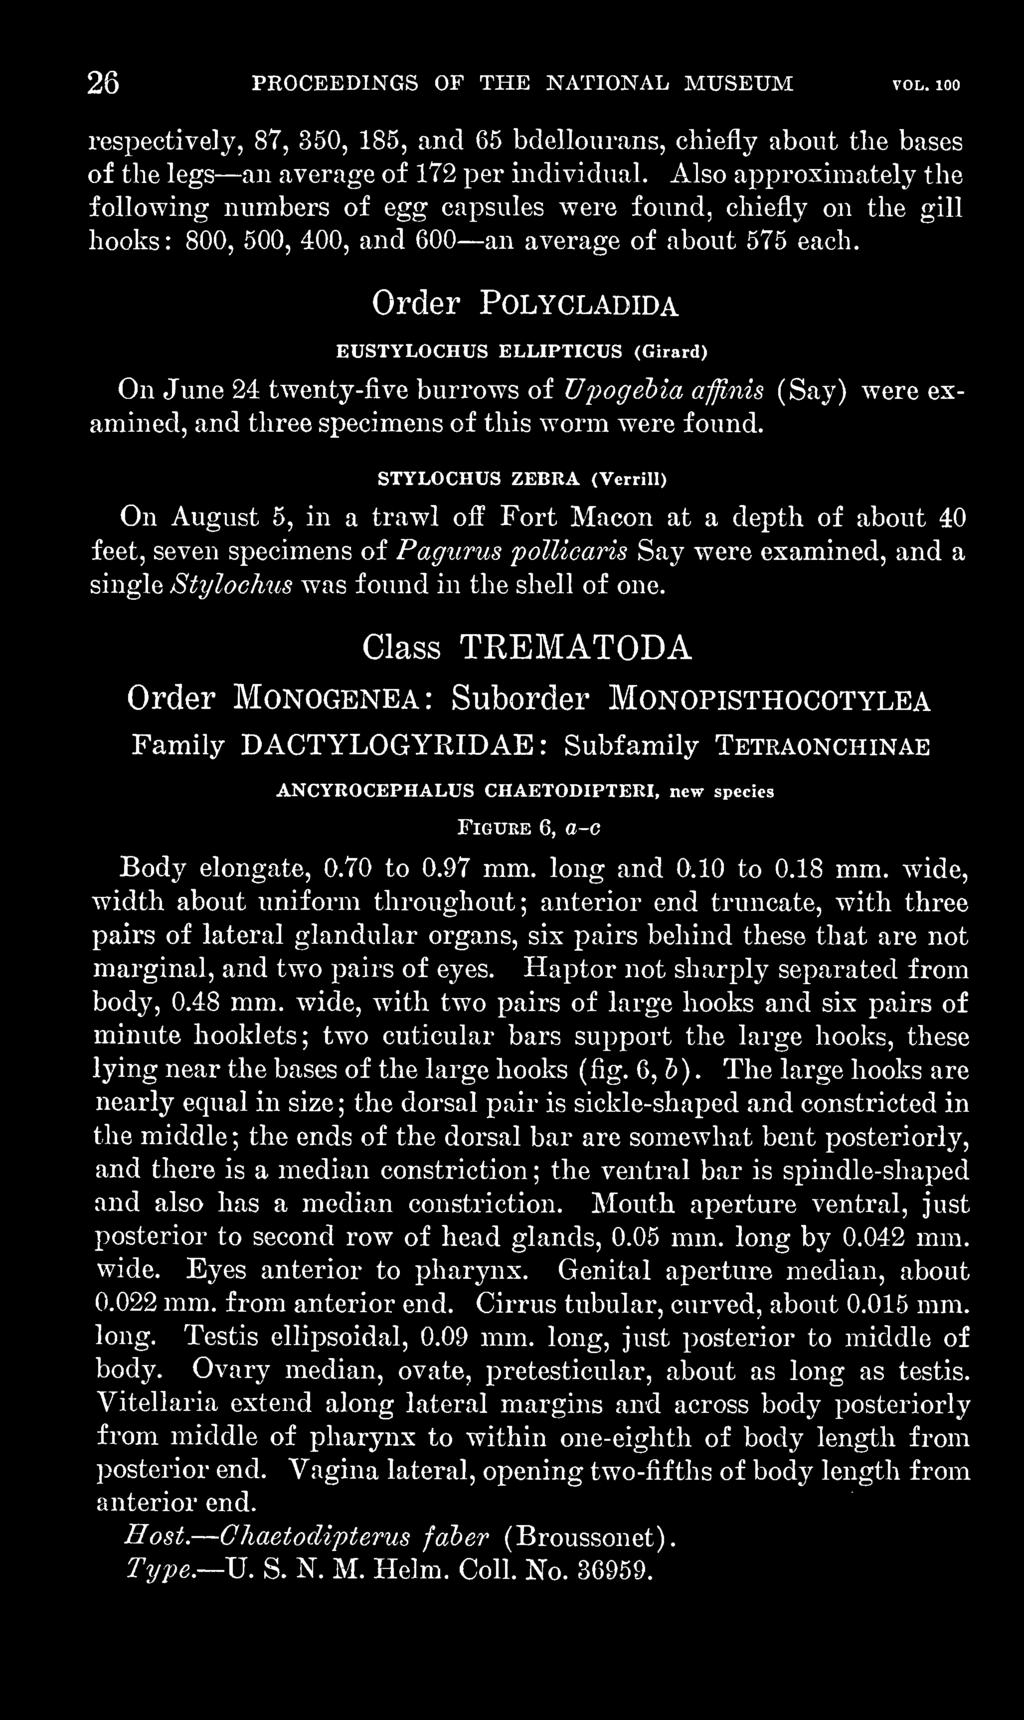 one. Class TREMATODA Order Monogenea: Suborder Monopisthocotylea Family DACTYLOGYRIDAE : Subfamily Tetraonchinae ANCYROCEPHALUS CHAETODIPTERI. new species FiGtrBE 6, a-c Body elongate, 0.70 to 0.